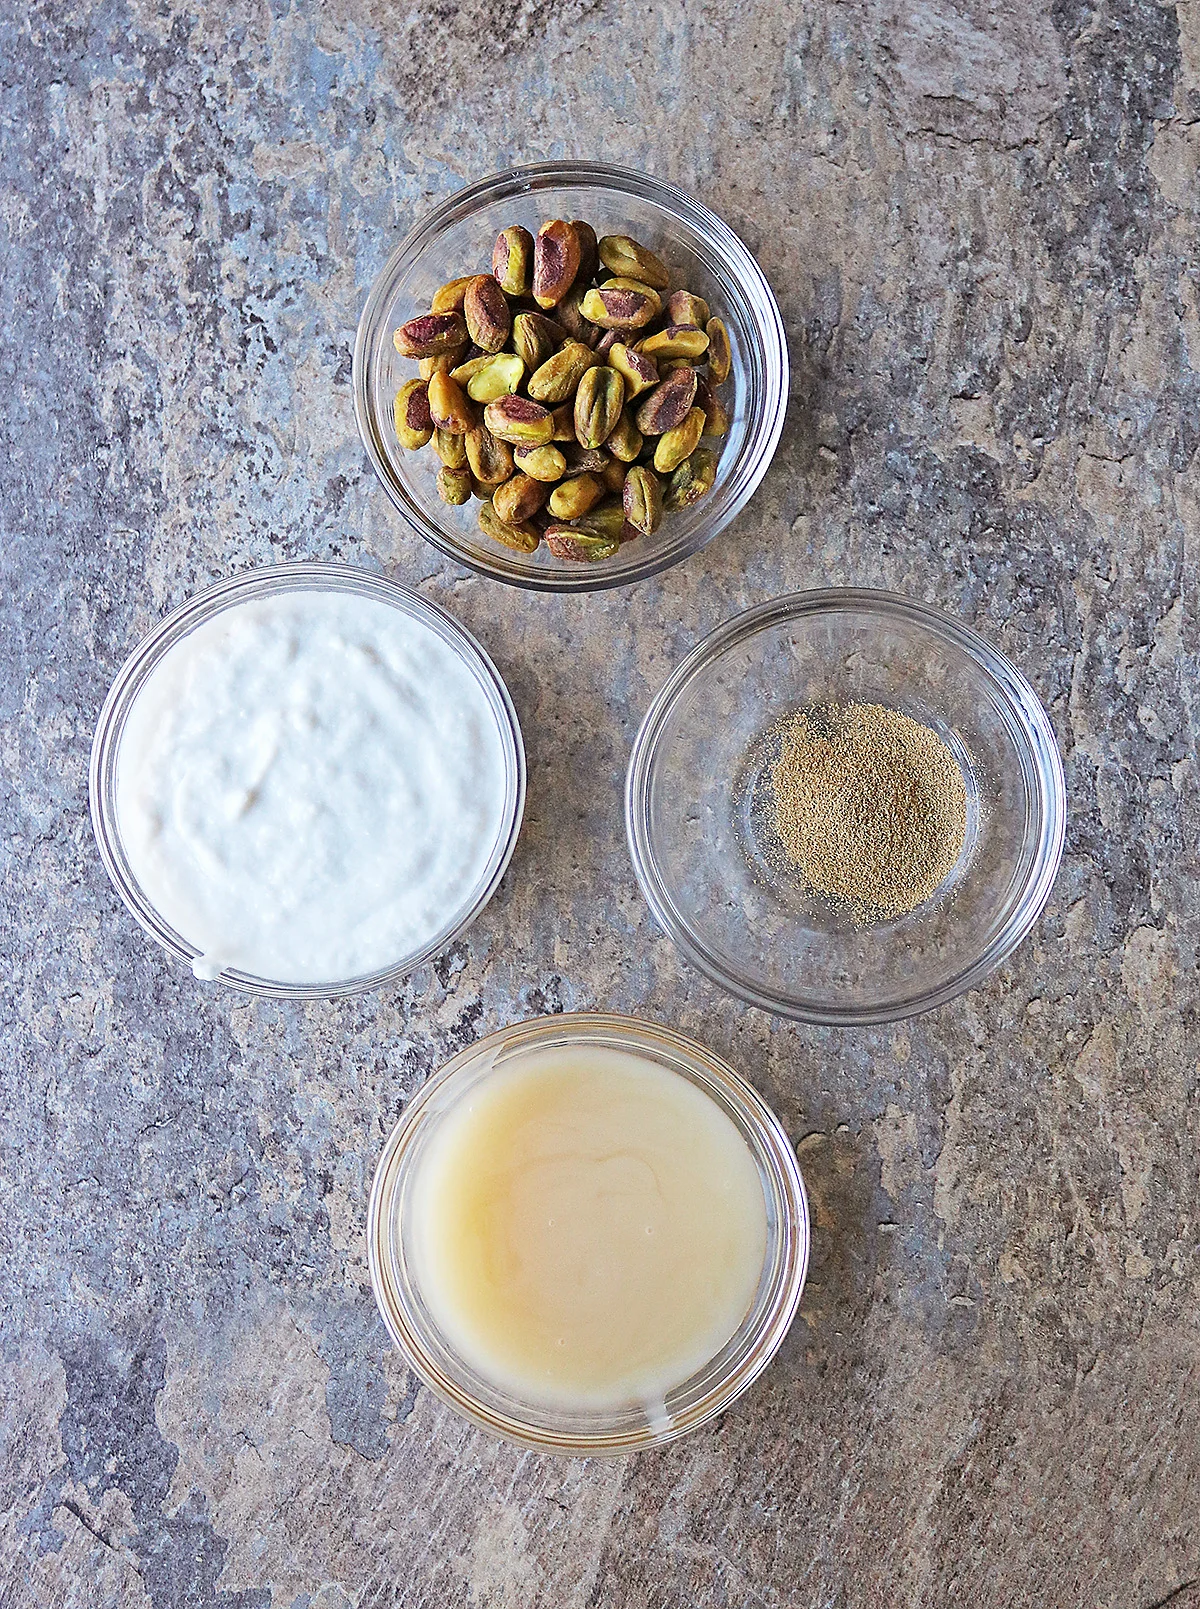 4 ingredients needed to make this dairy-free pistachio ice cream